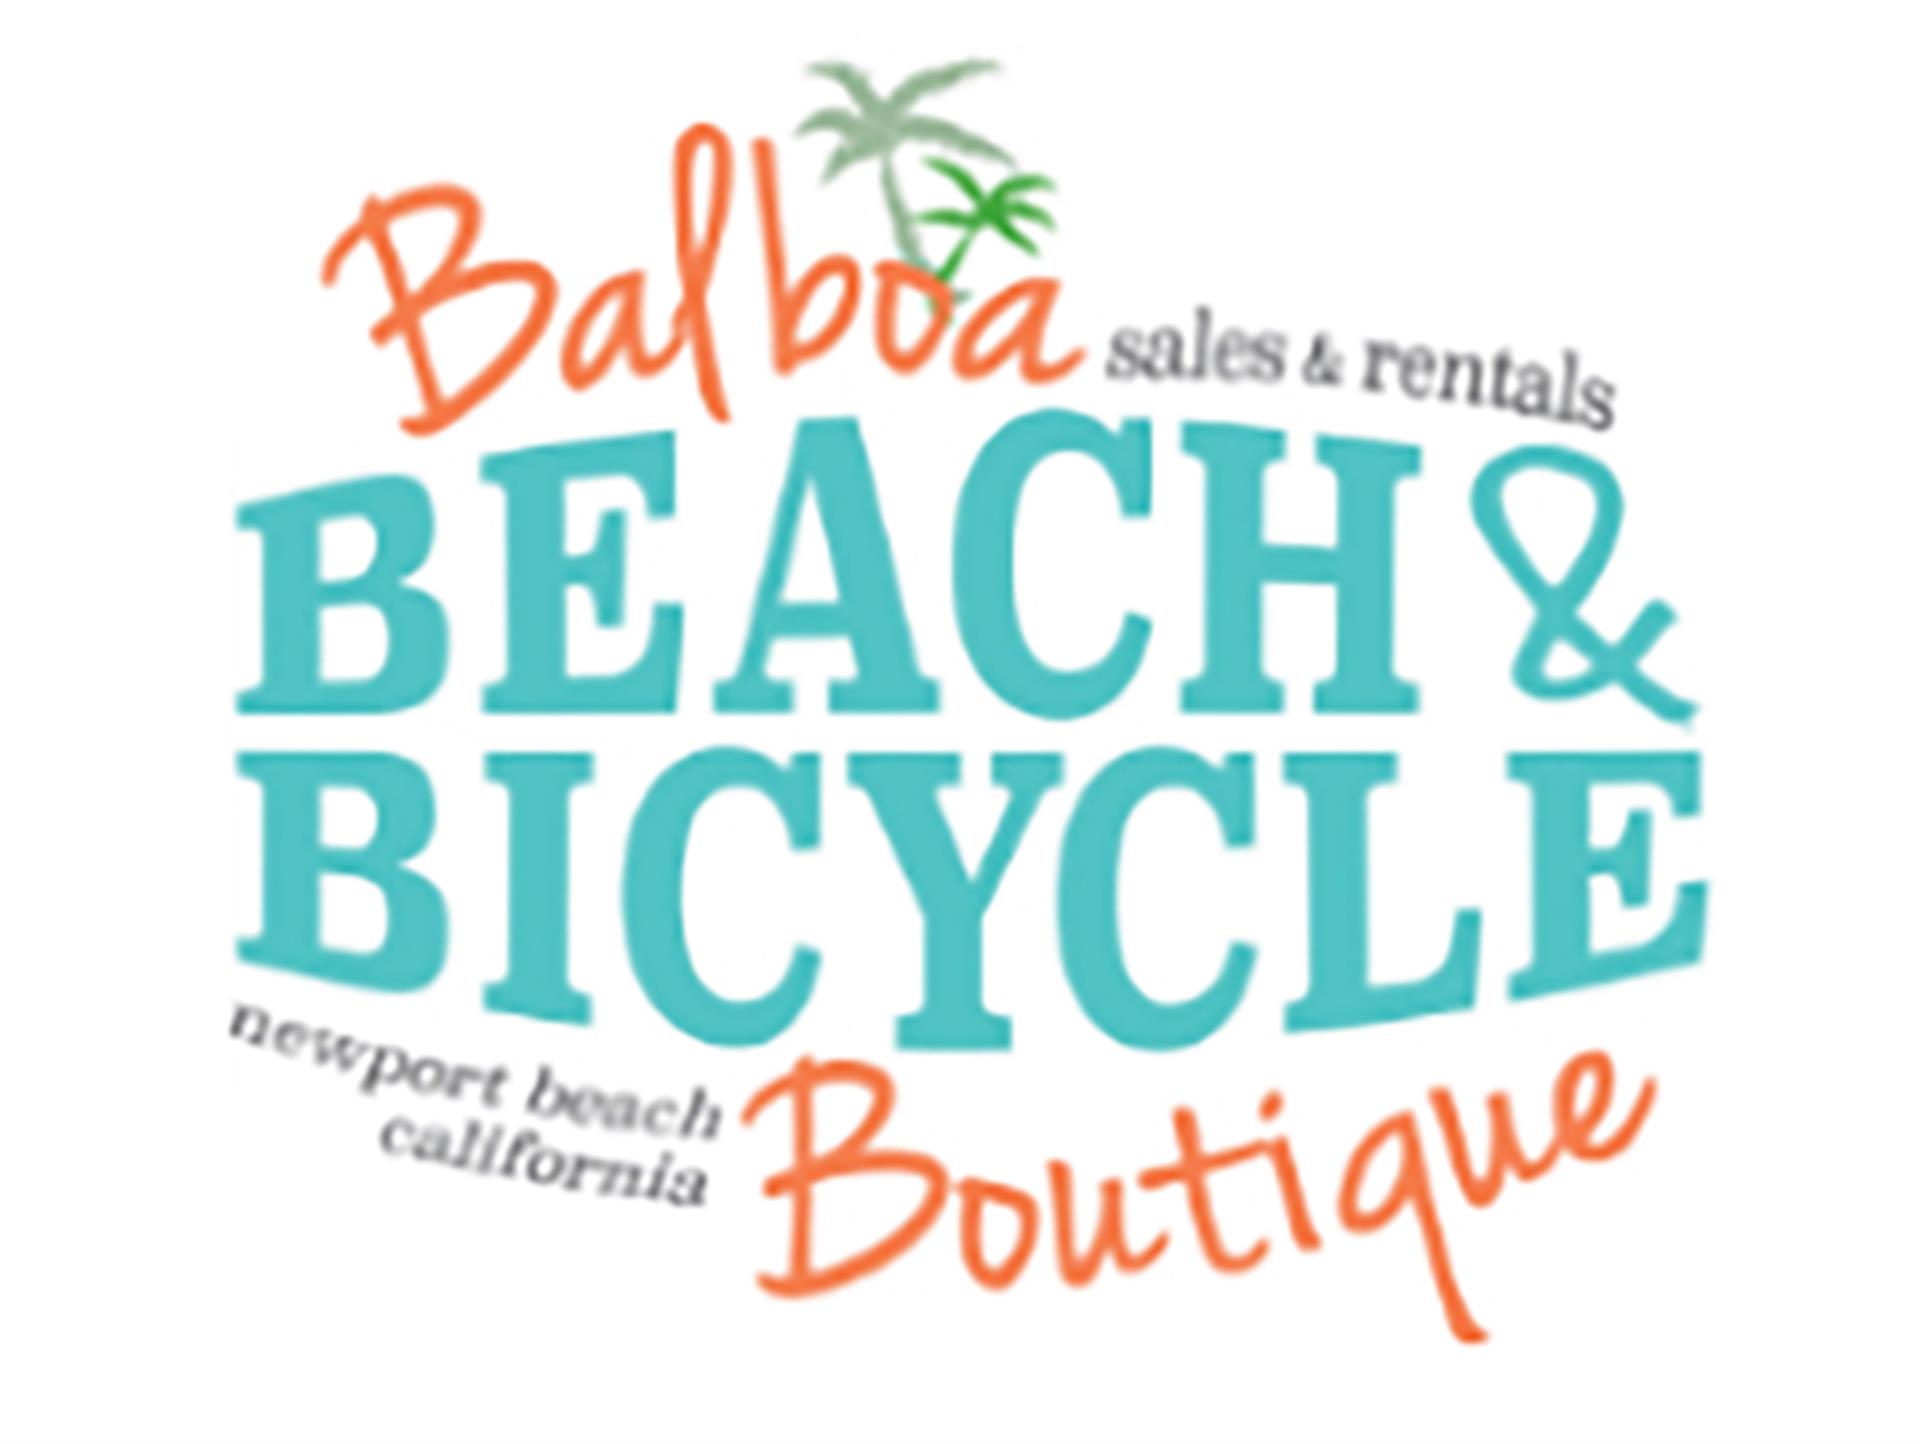 Balboa Beach  Bicycle Boutique